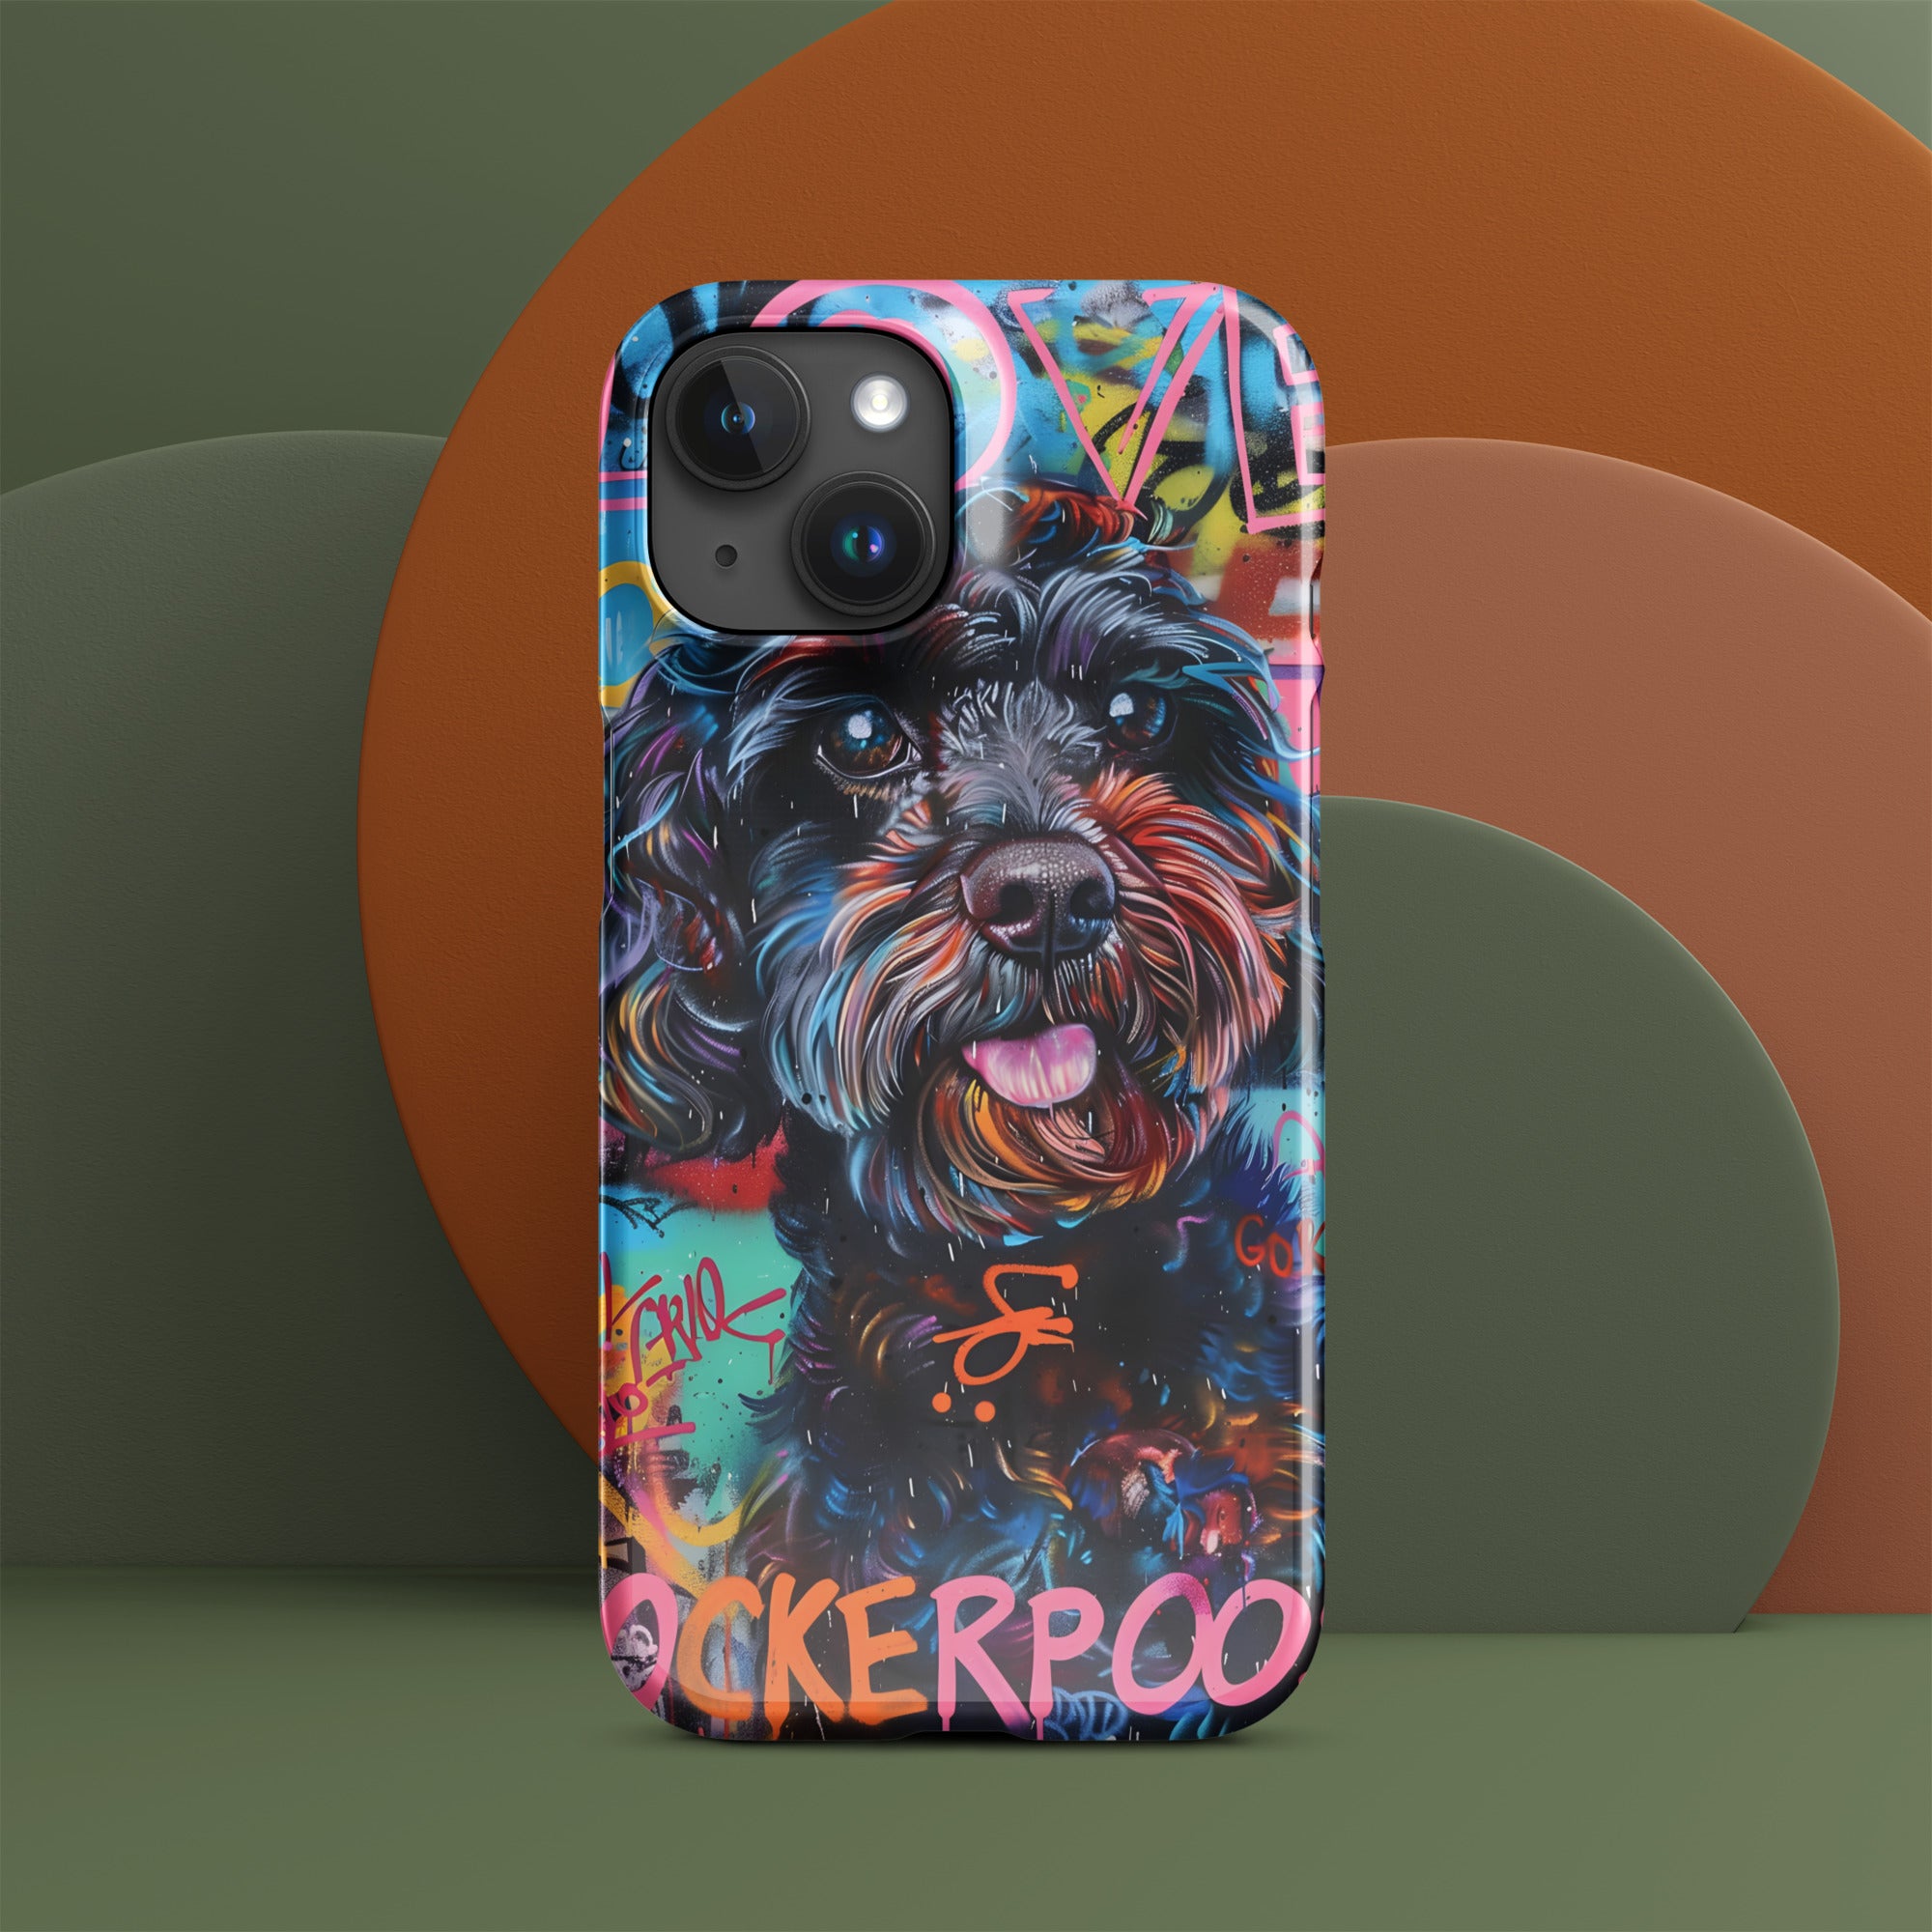 Cockerpoo Snap case for iPhone®